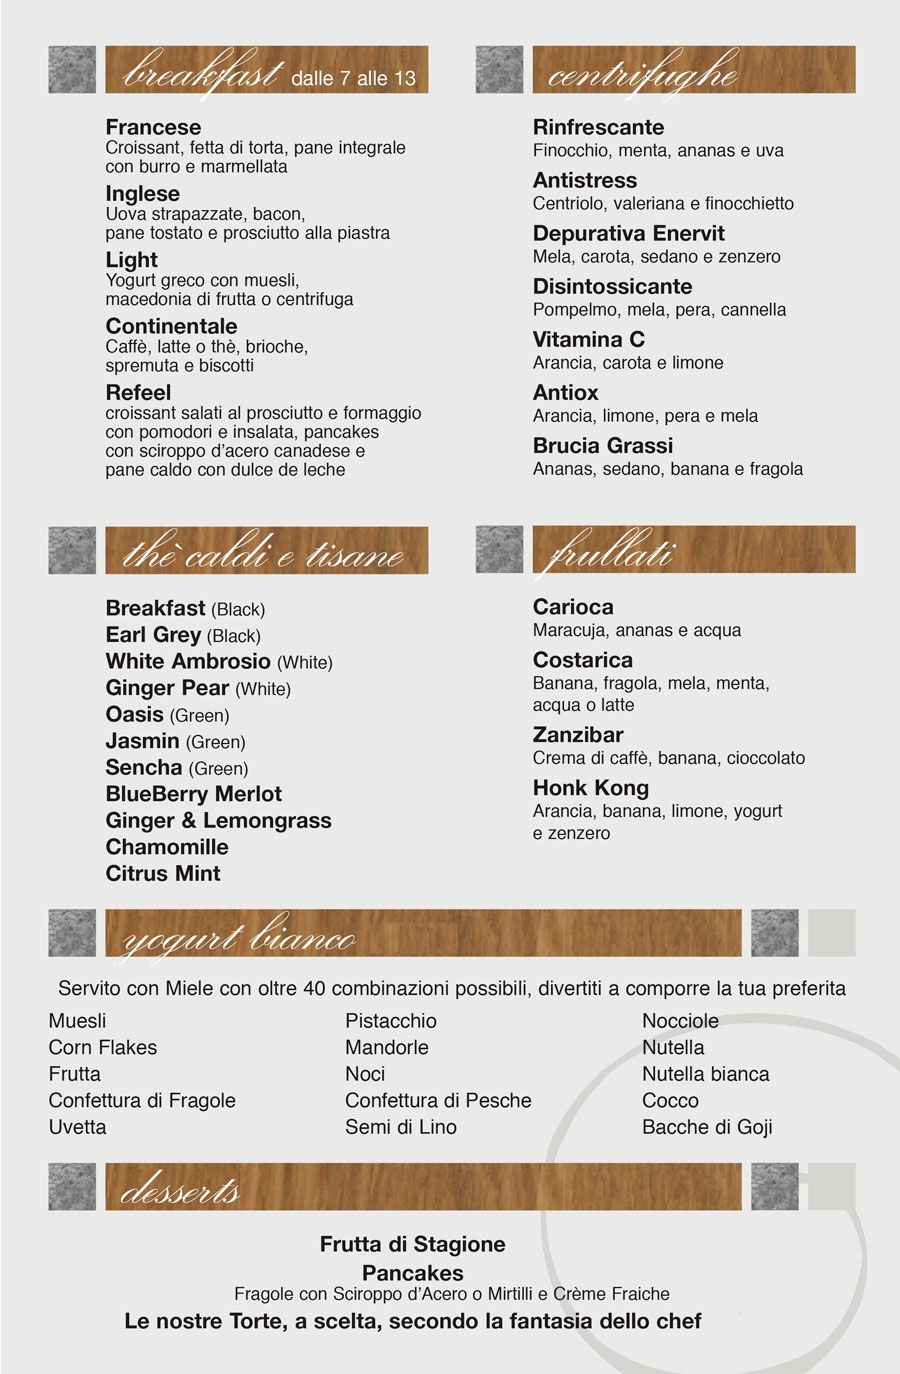 menu diviso per categorie su carta grigia